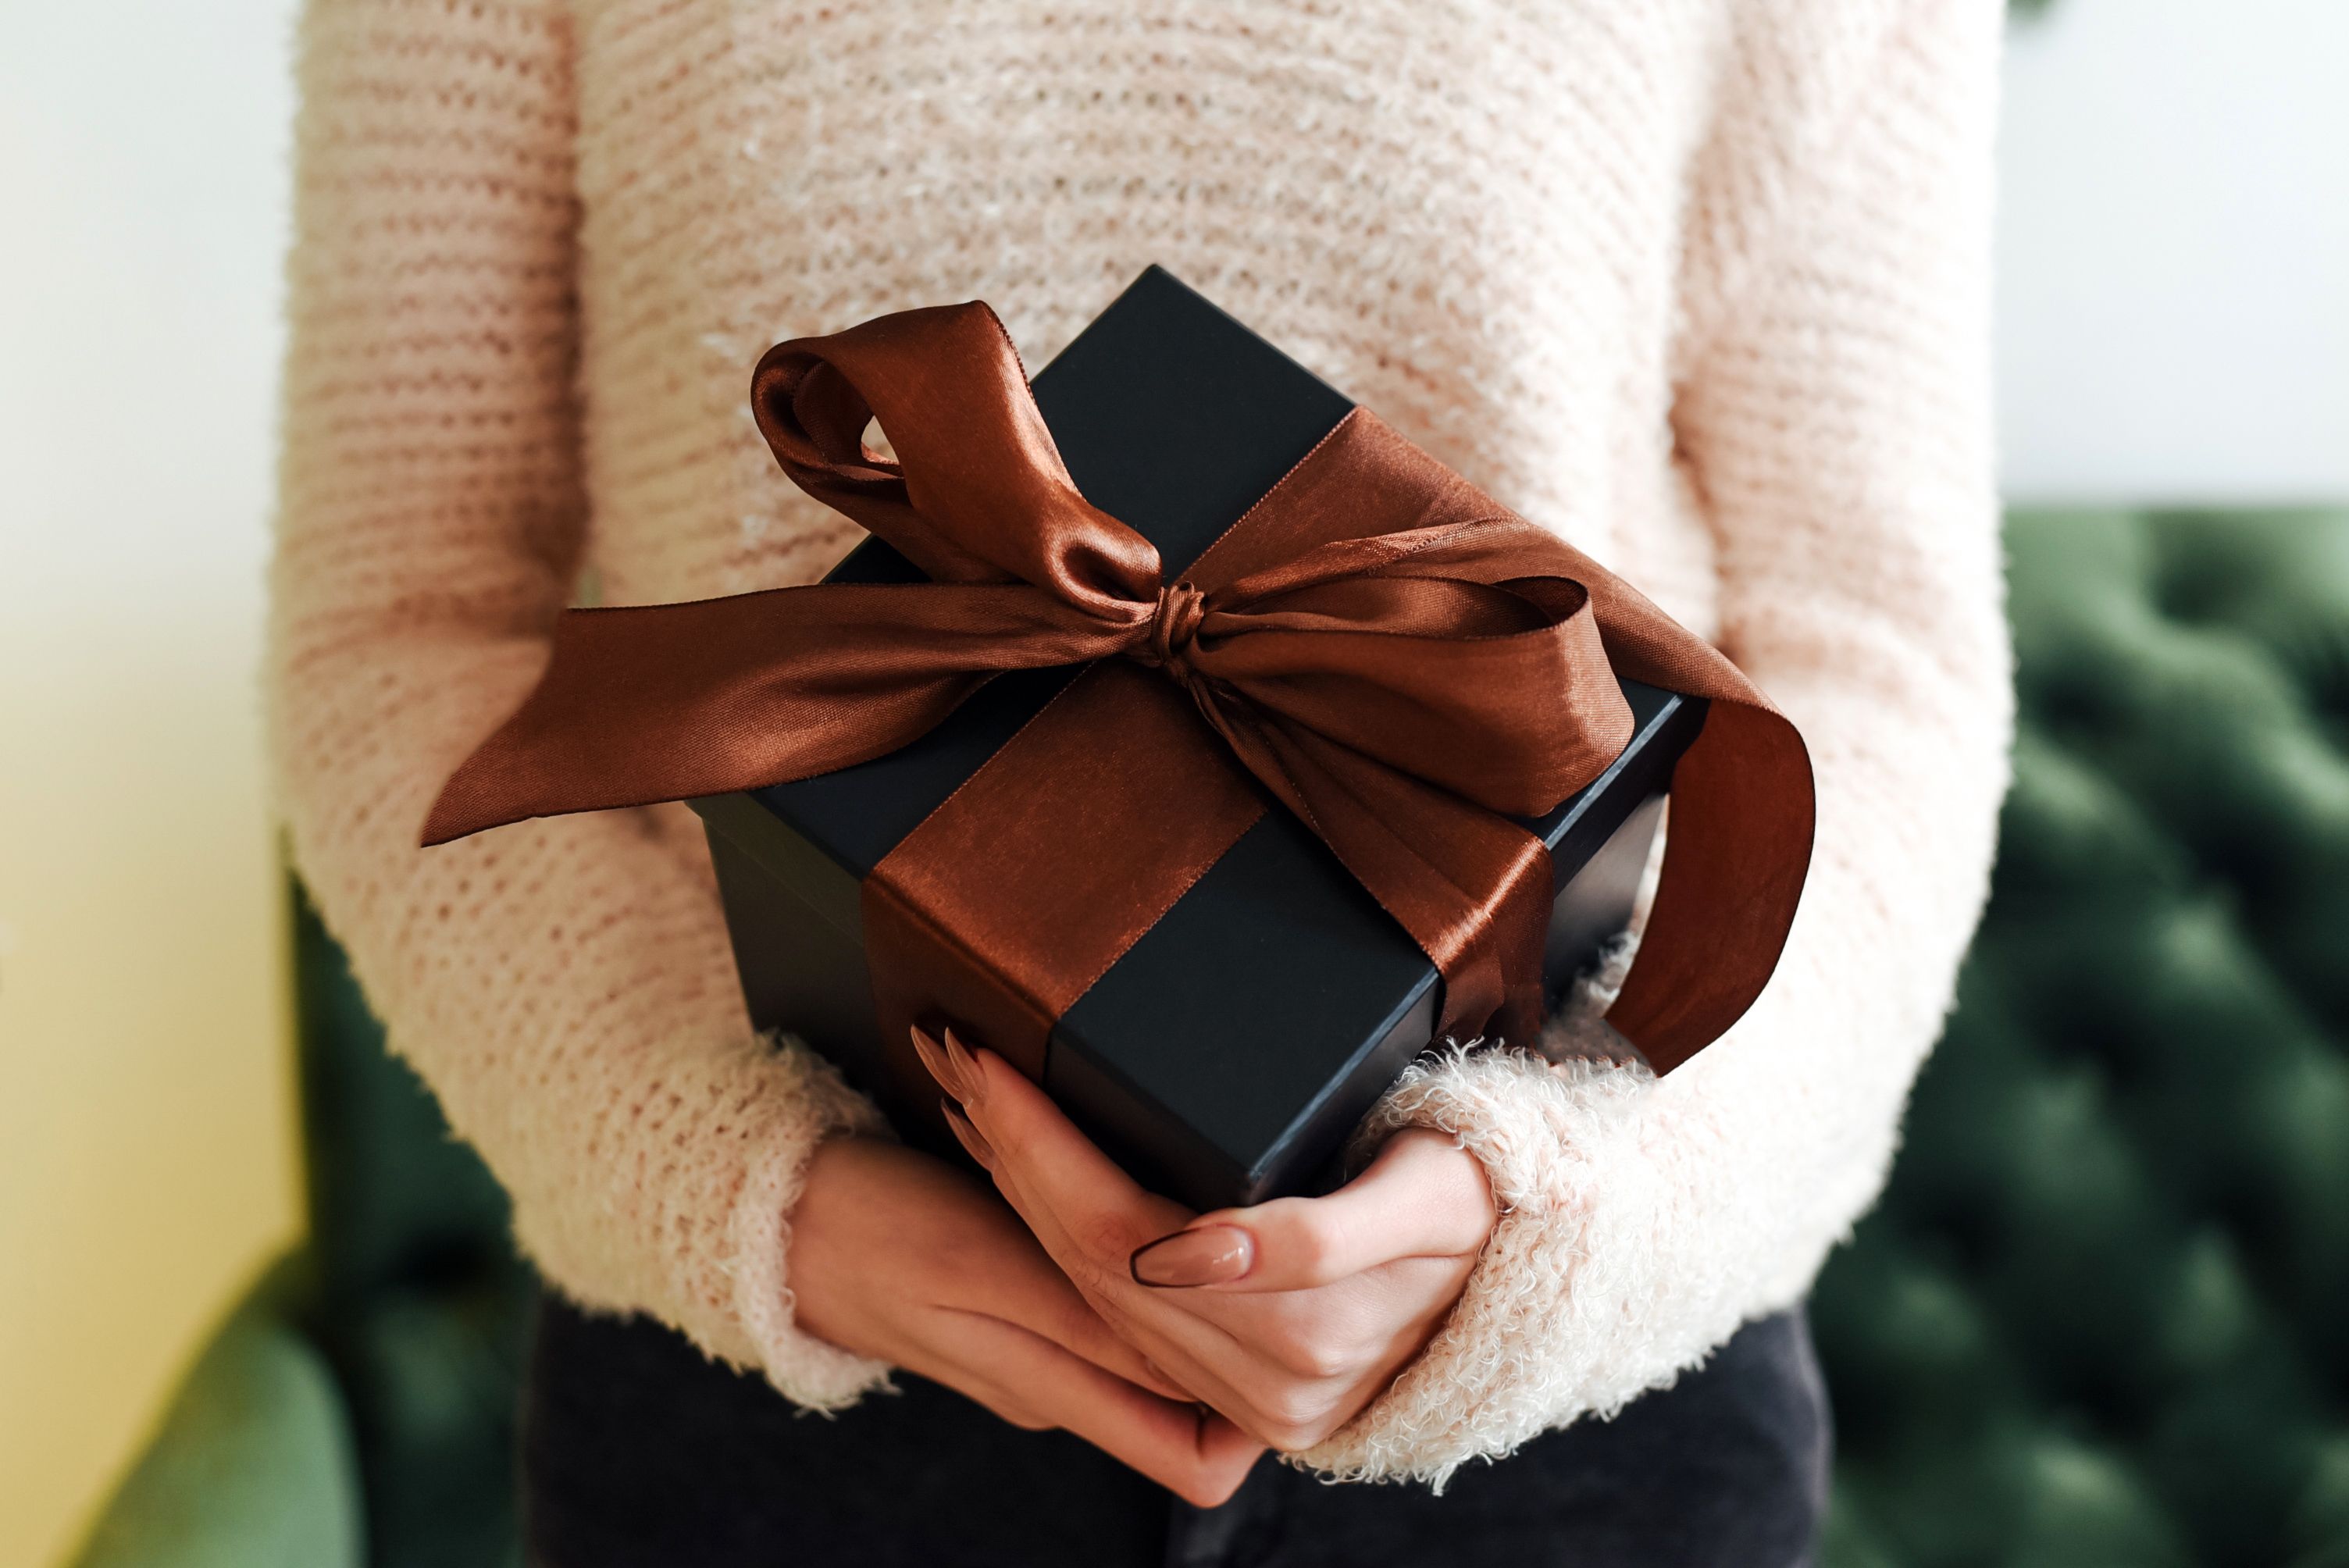 https://hips.hearstapps.com/hmg-prod/images/gift-box-in-female-hands-new-year-christmas-gift-royalty-free-image-1700174786.jpg